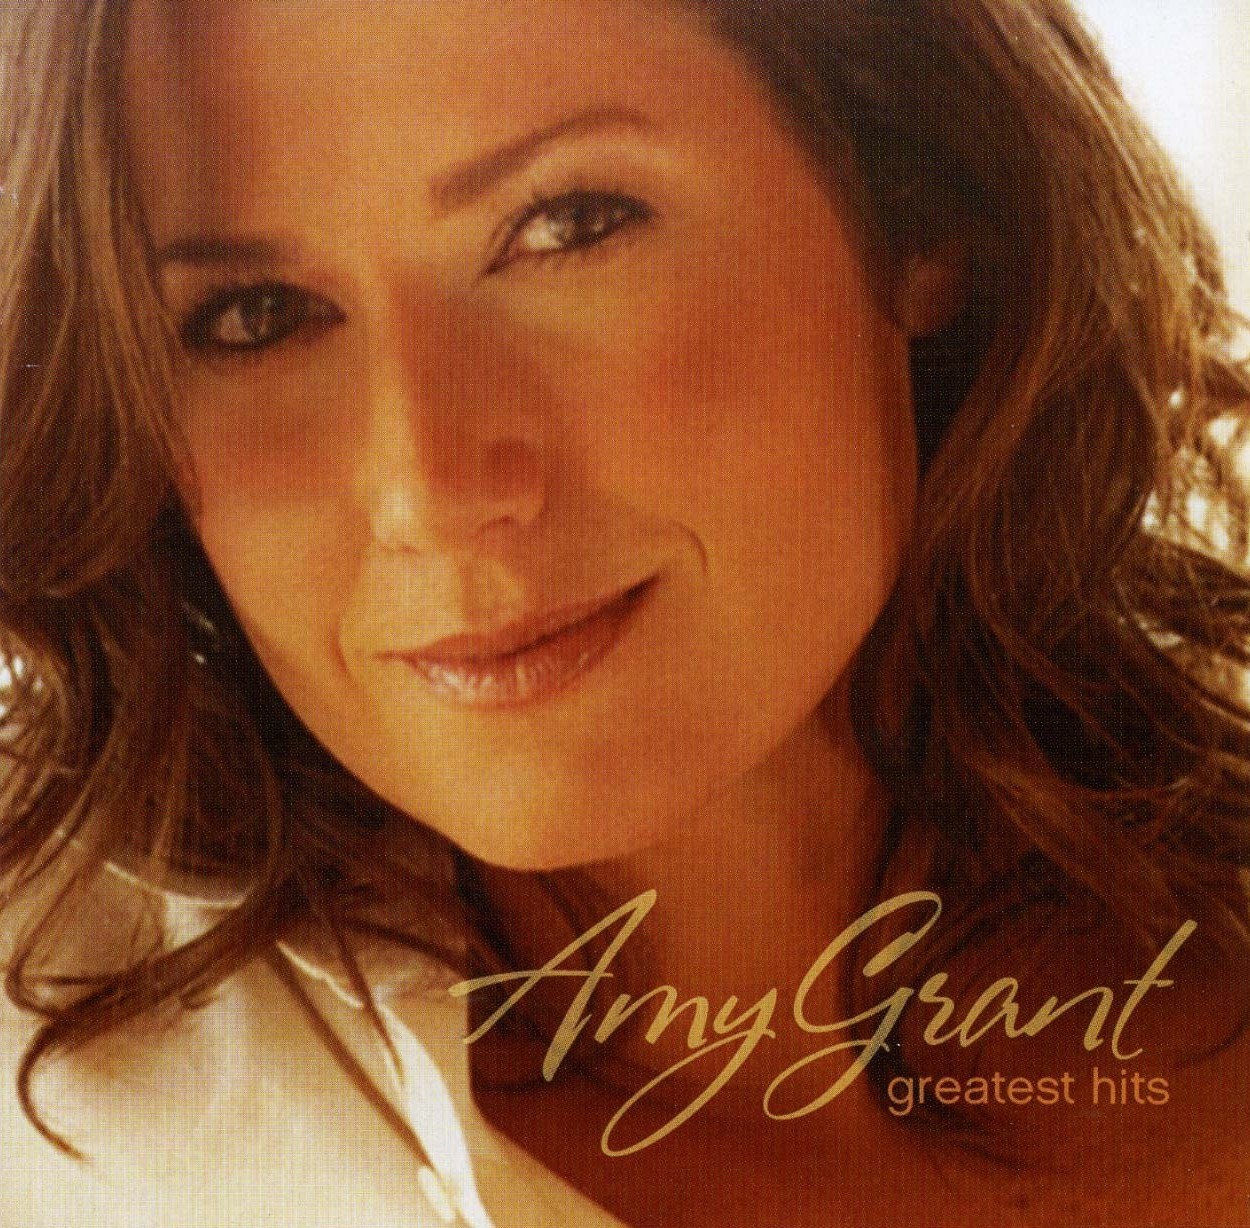 Amy Grant - Greatest Hits SE (CD+DVD)